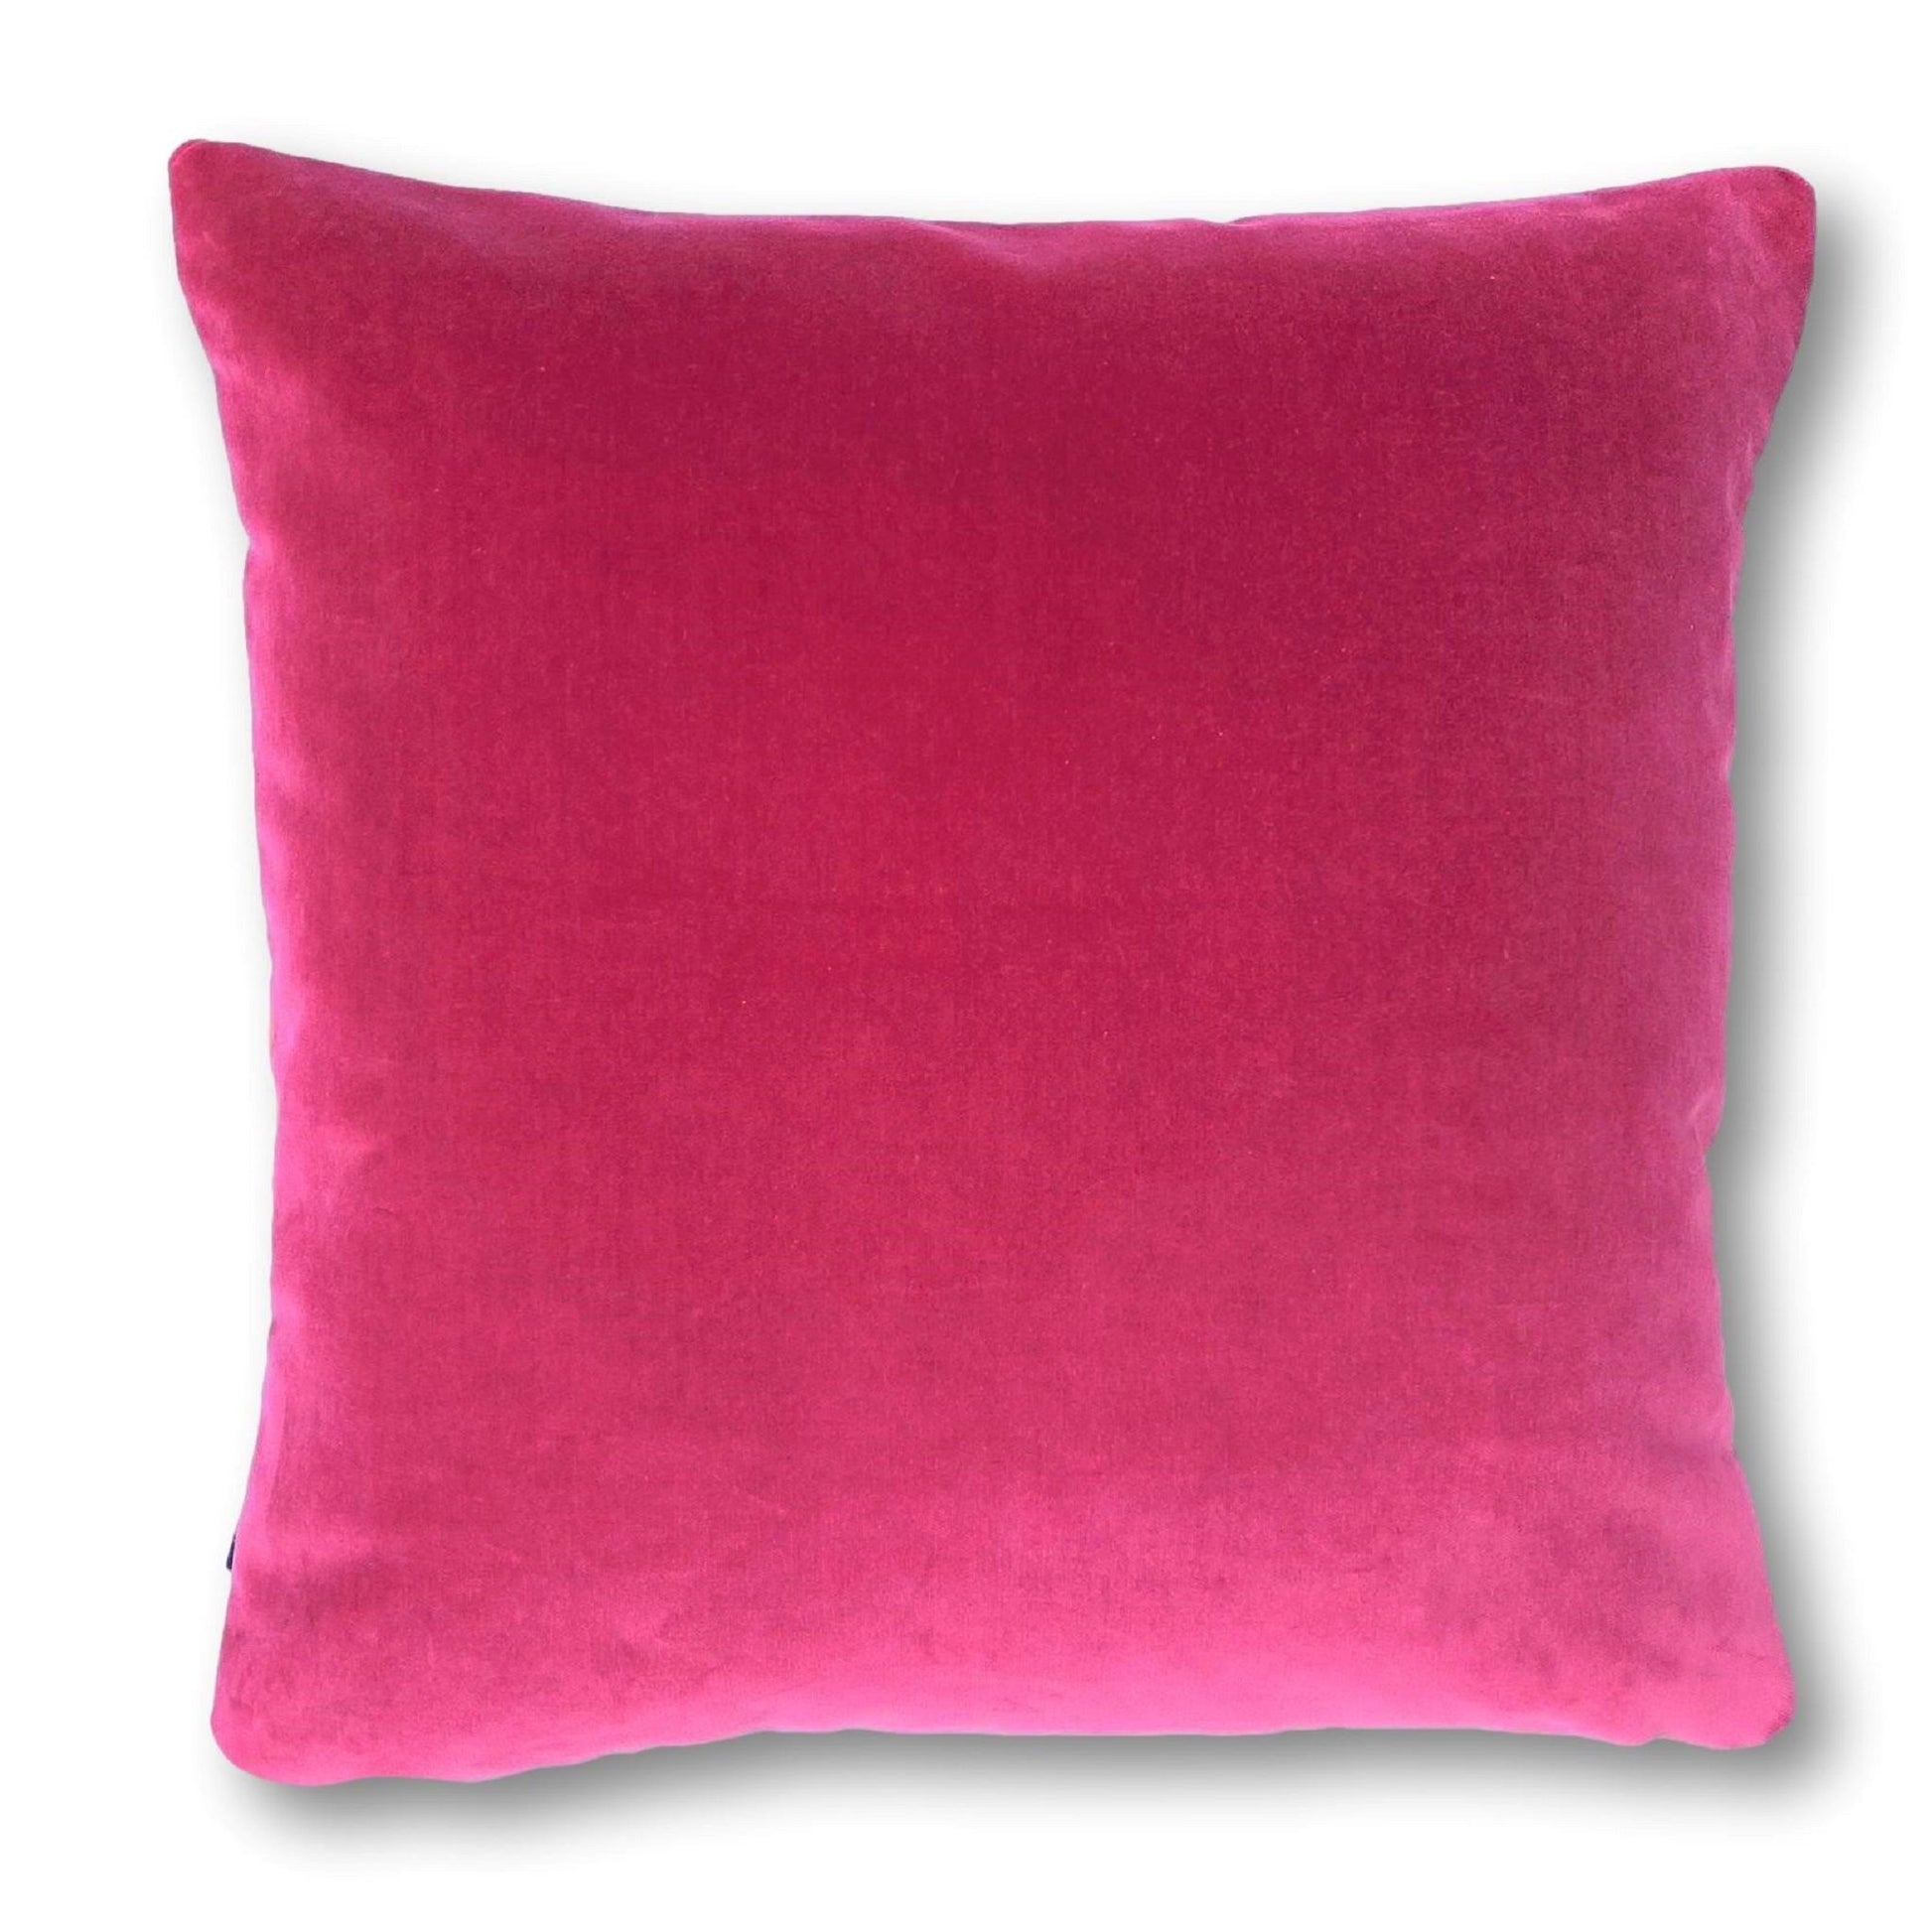 plain cushion covers pink